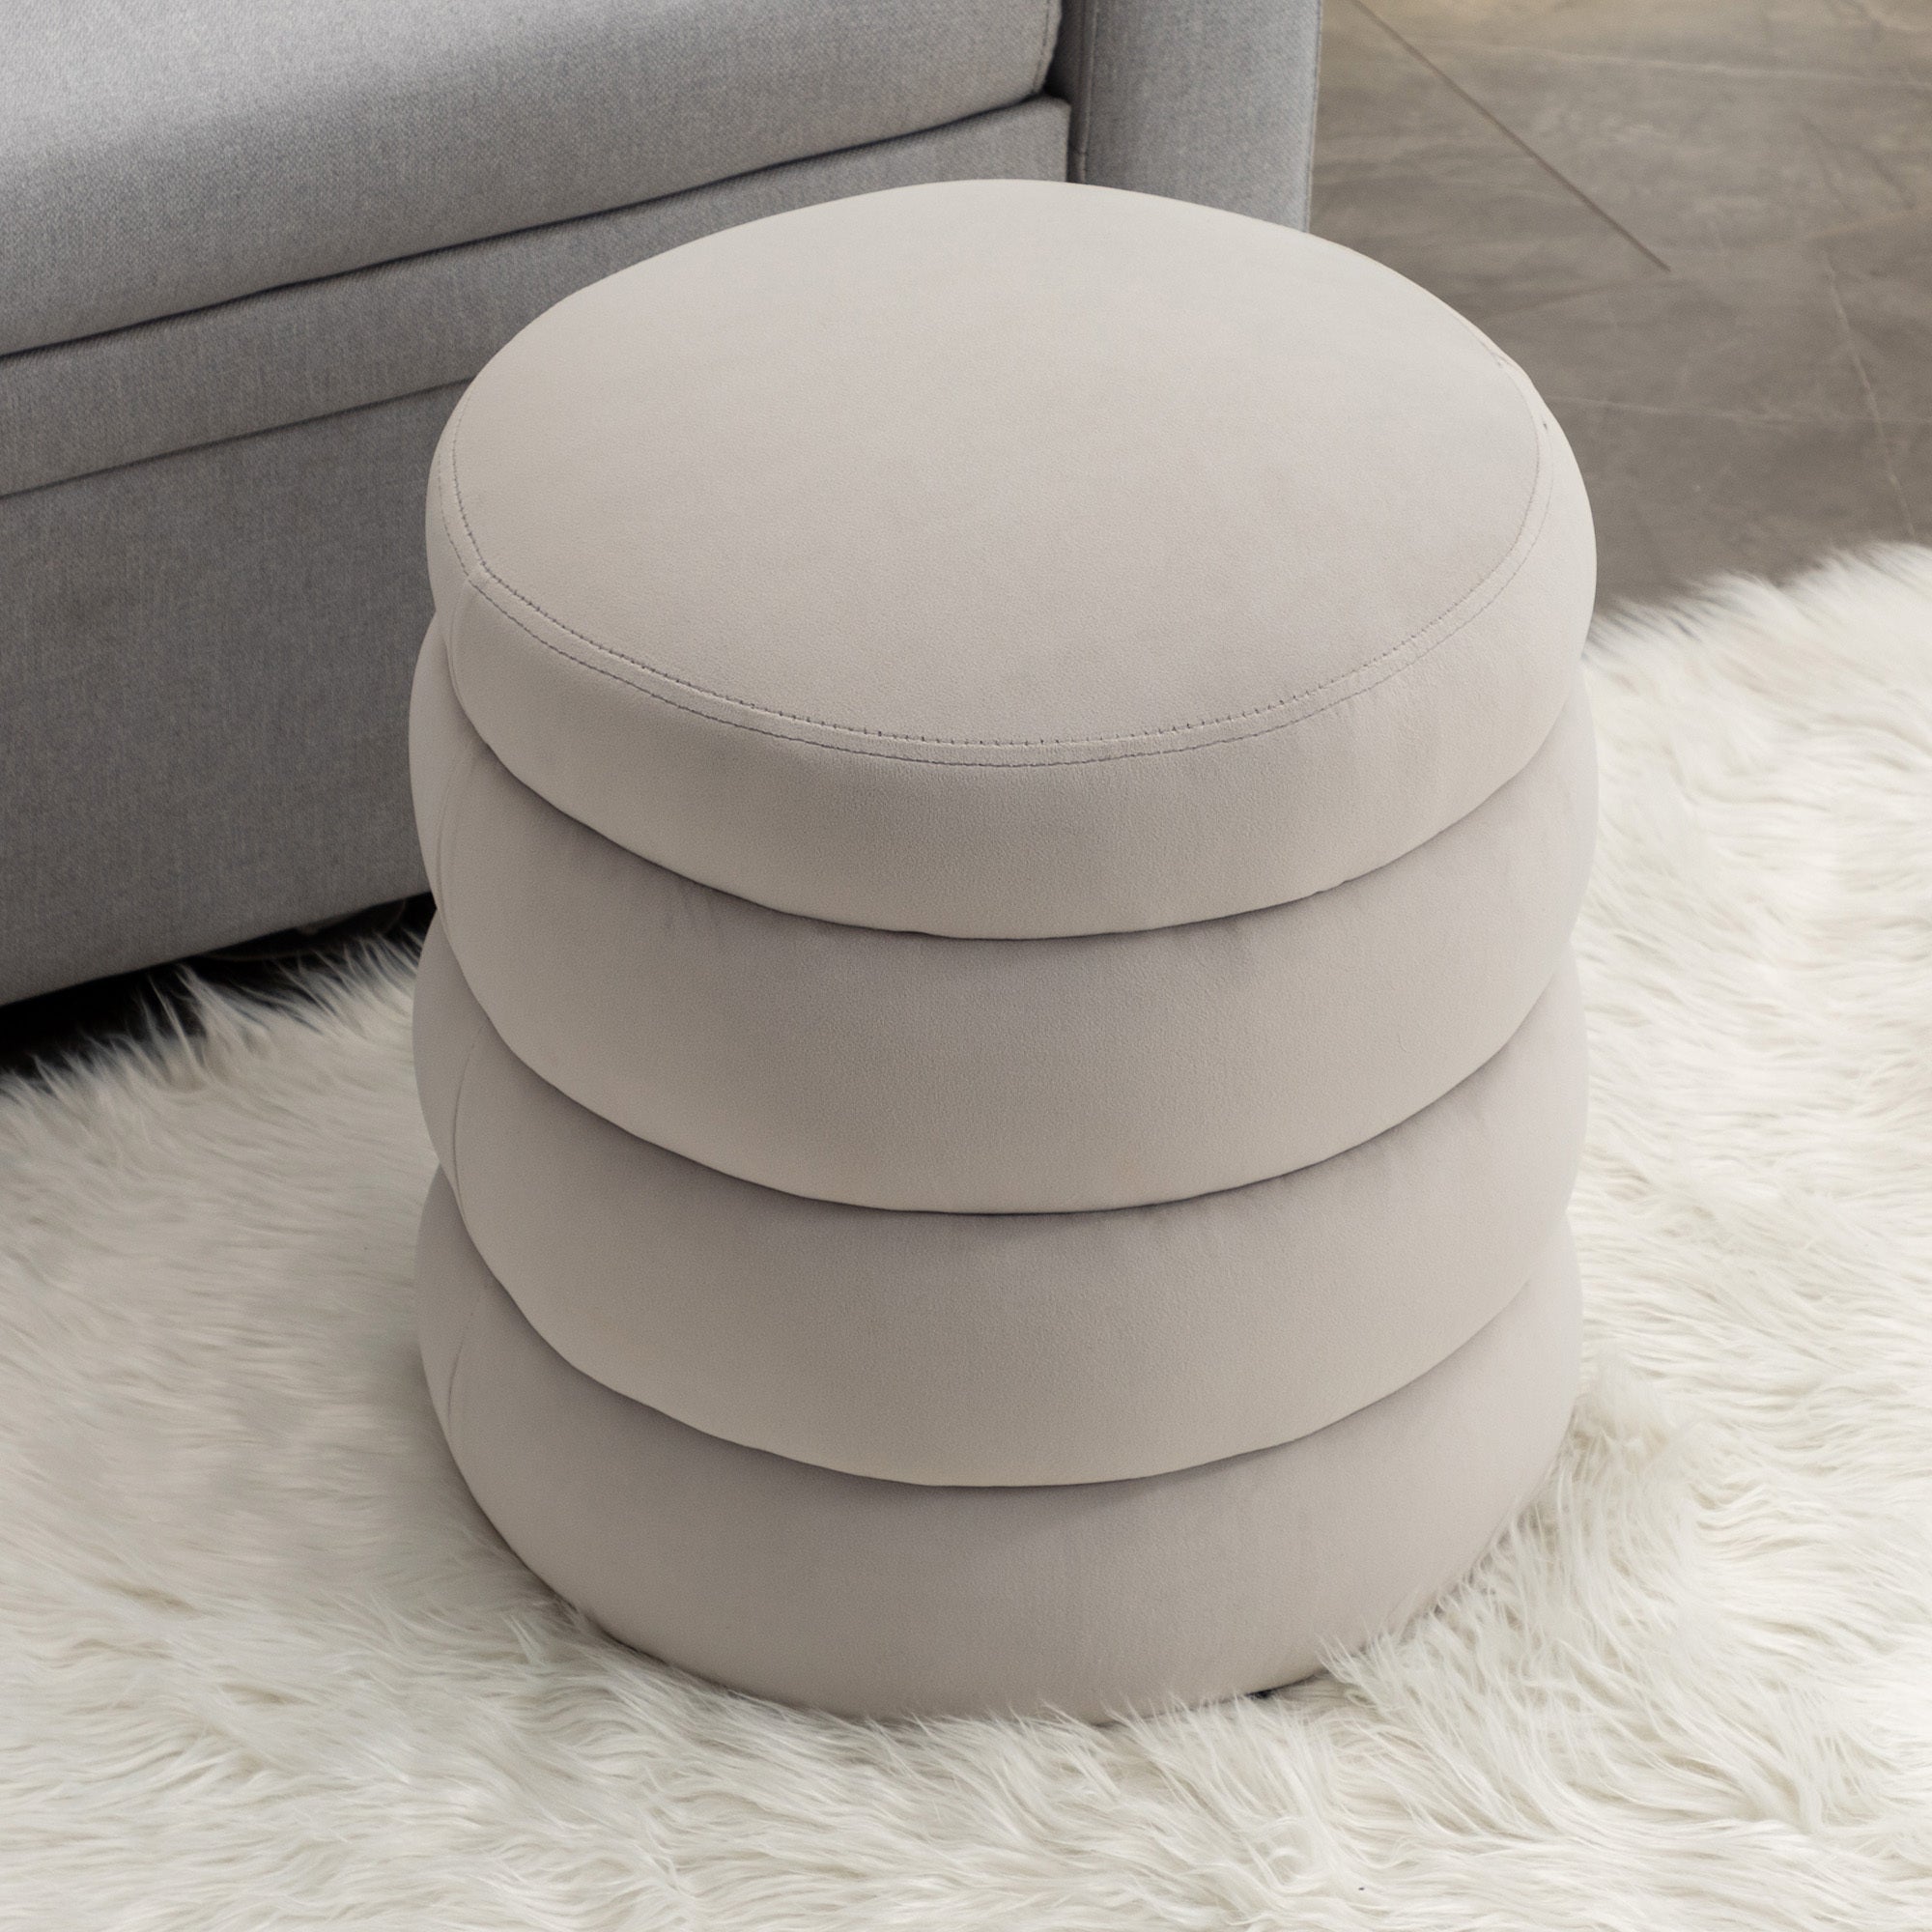 006-Soft Velvet Round Ottoman Footrest Stool,Light Gray